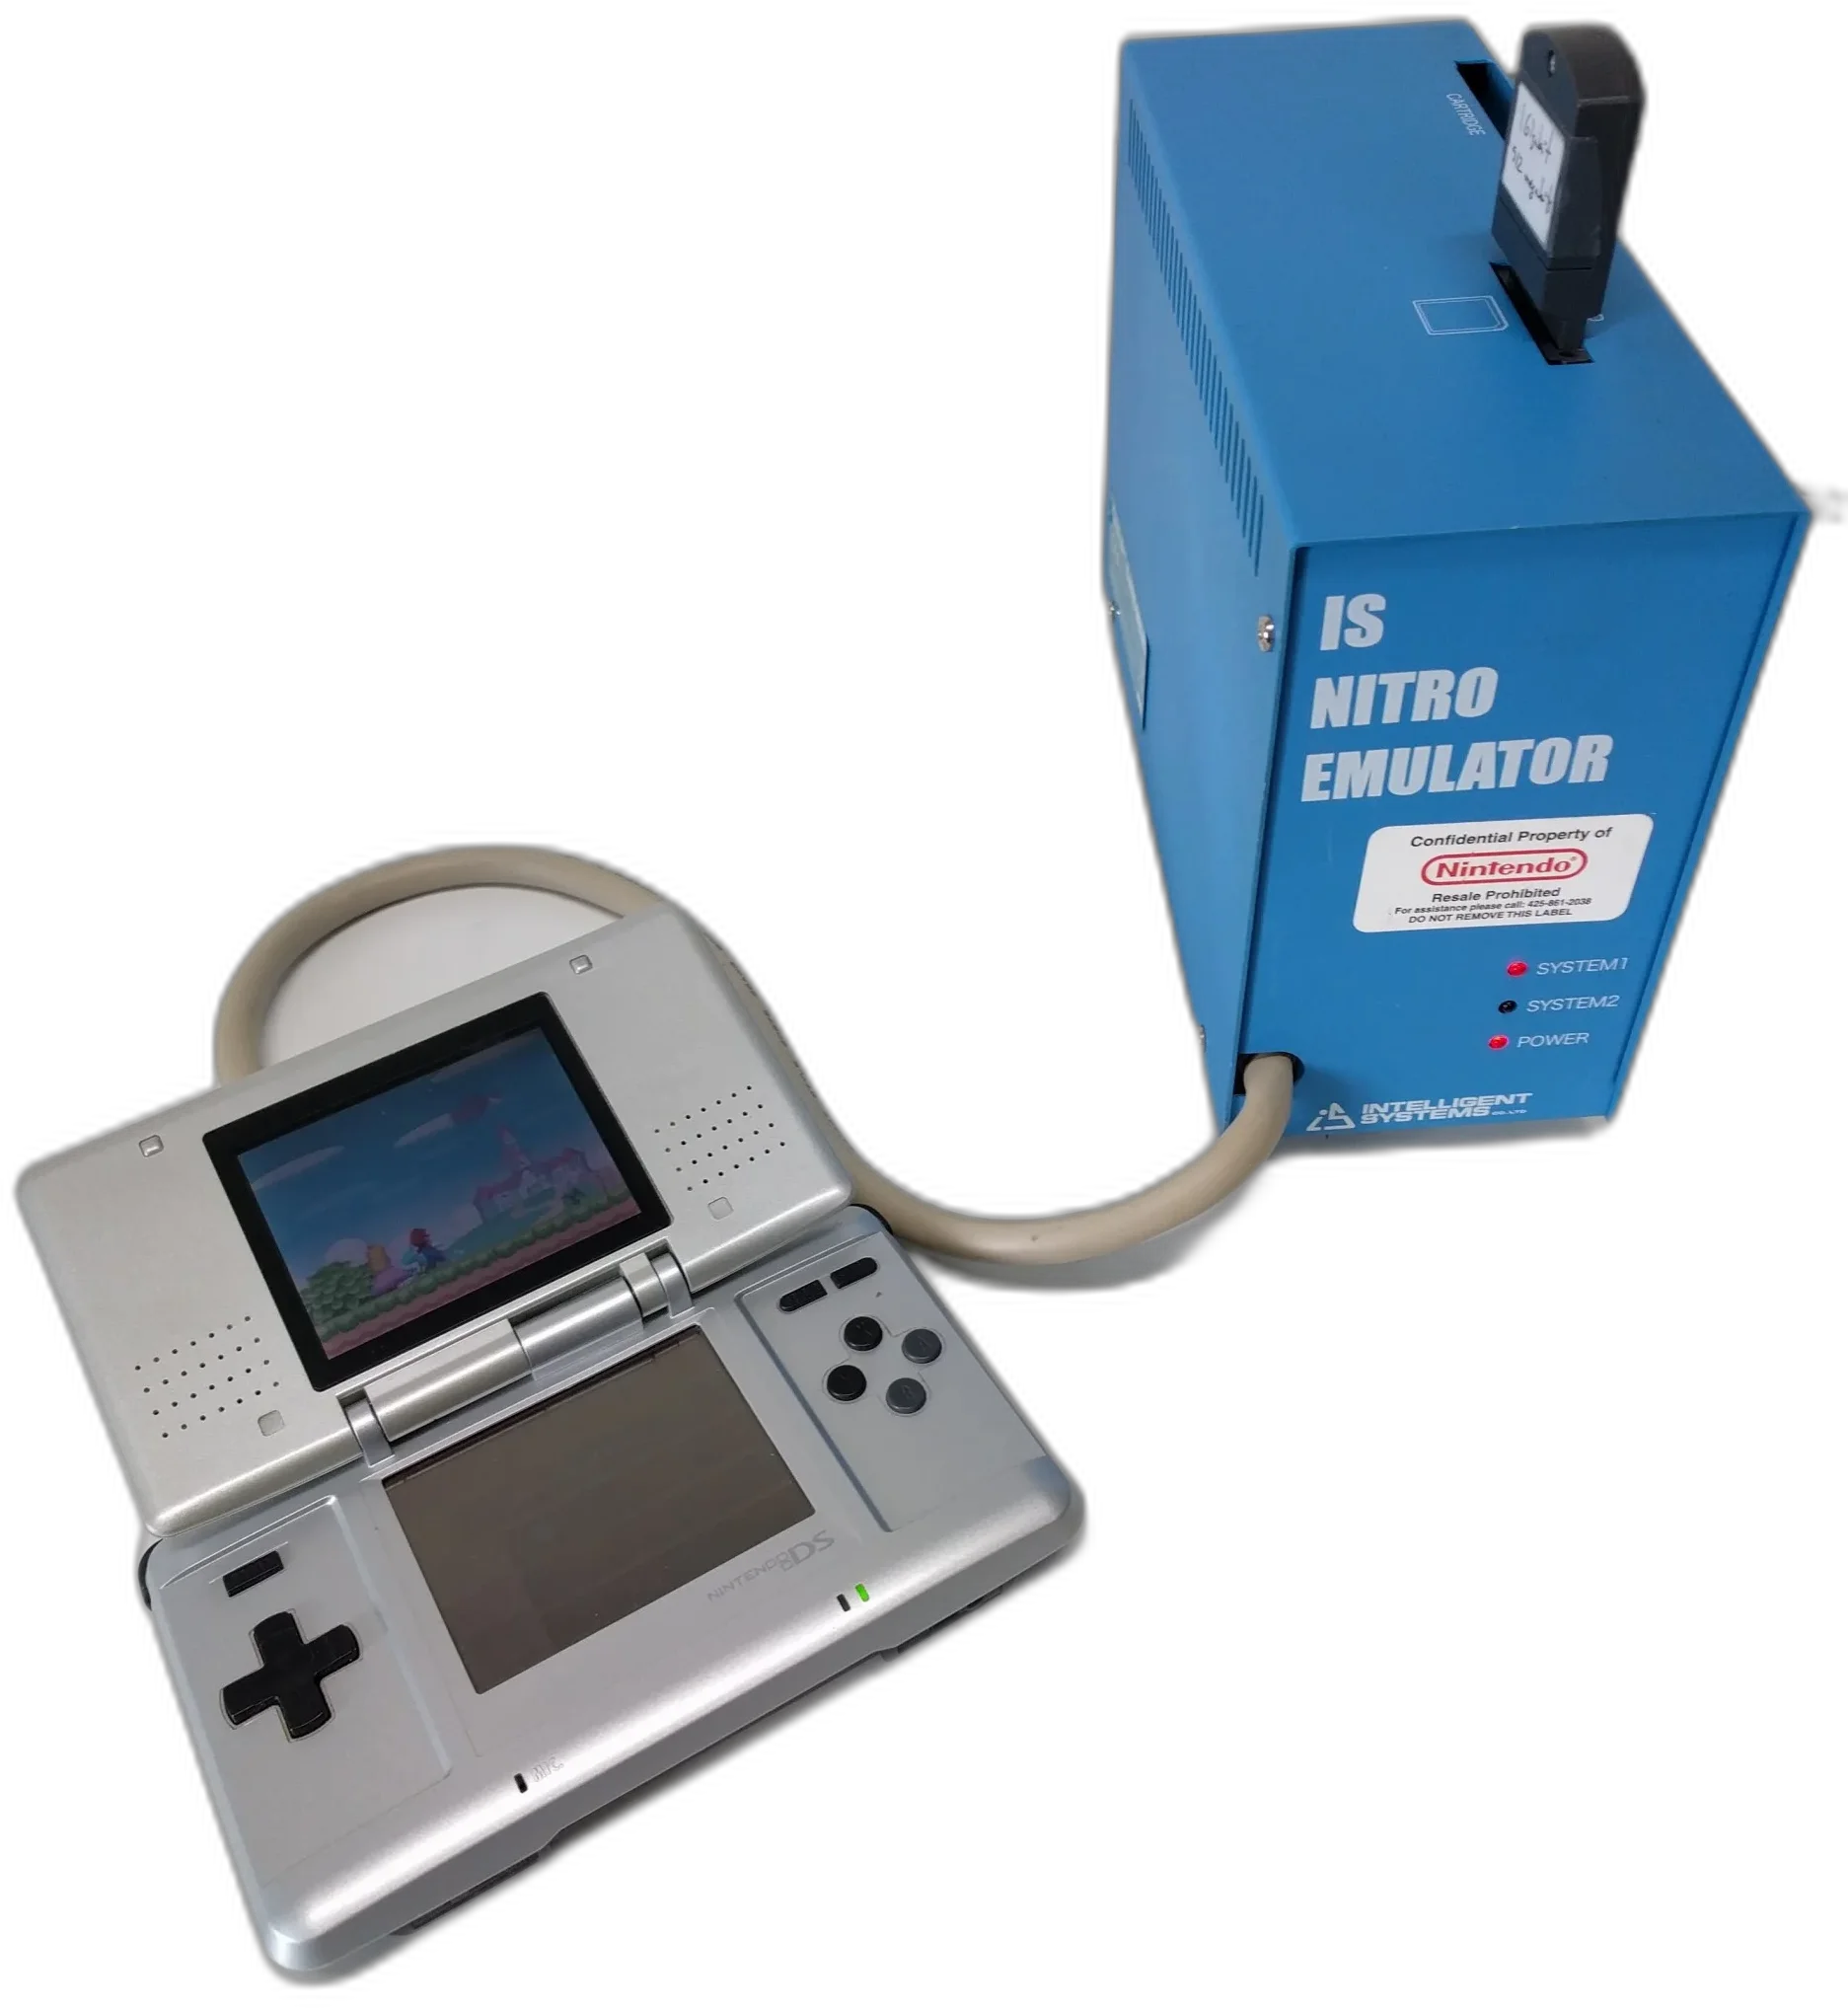  Nintendo DS IS-NITRO-EMULATOR